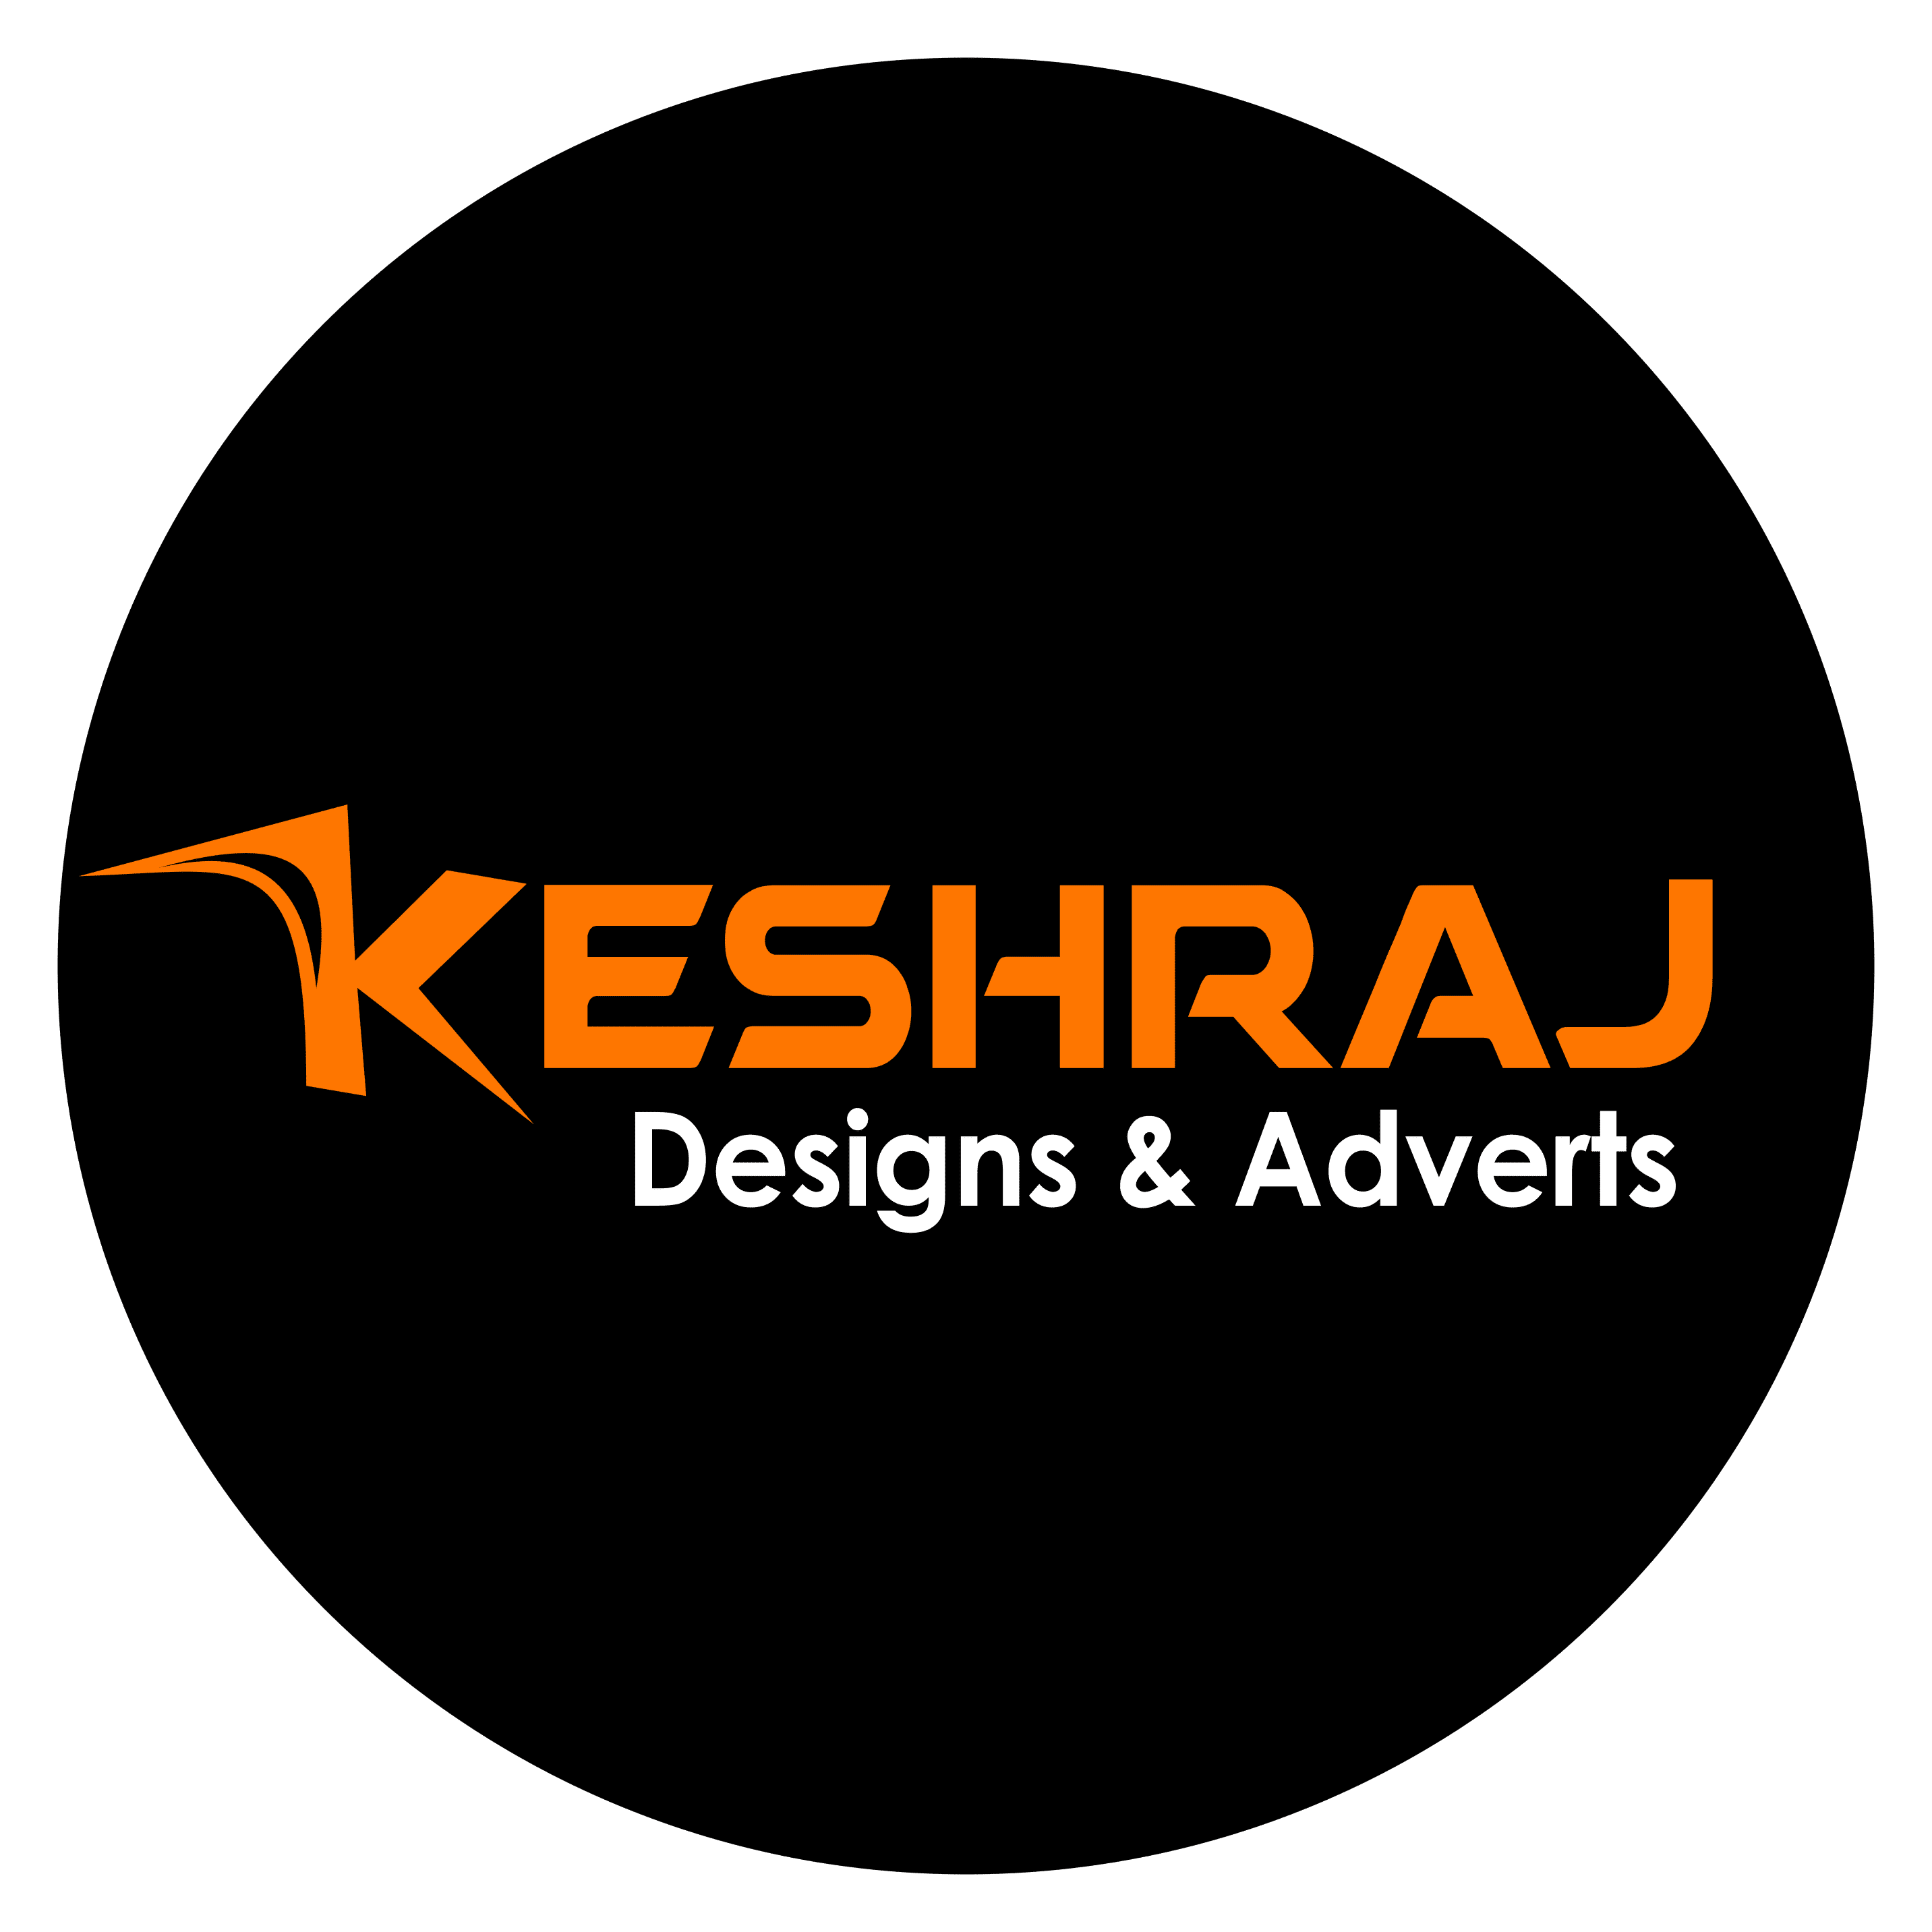 Keshraj Designs & Adverts